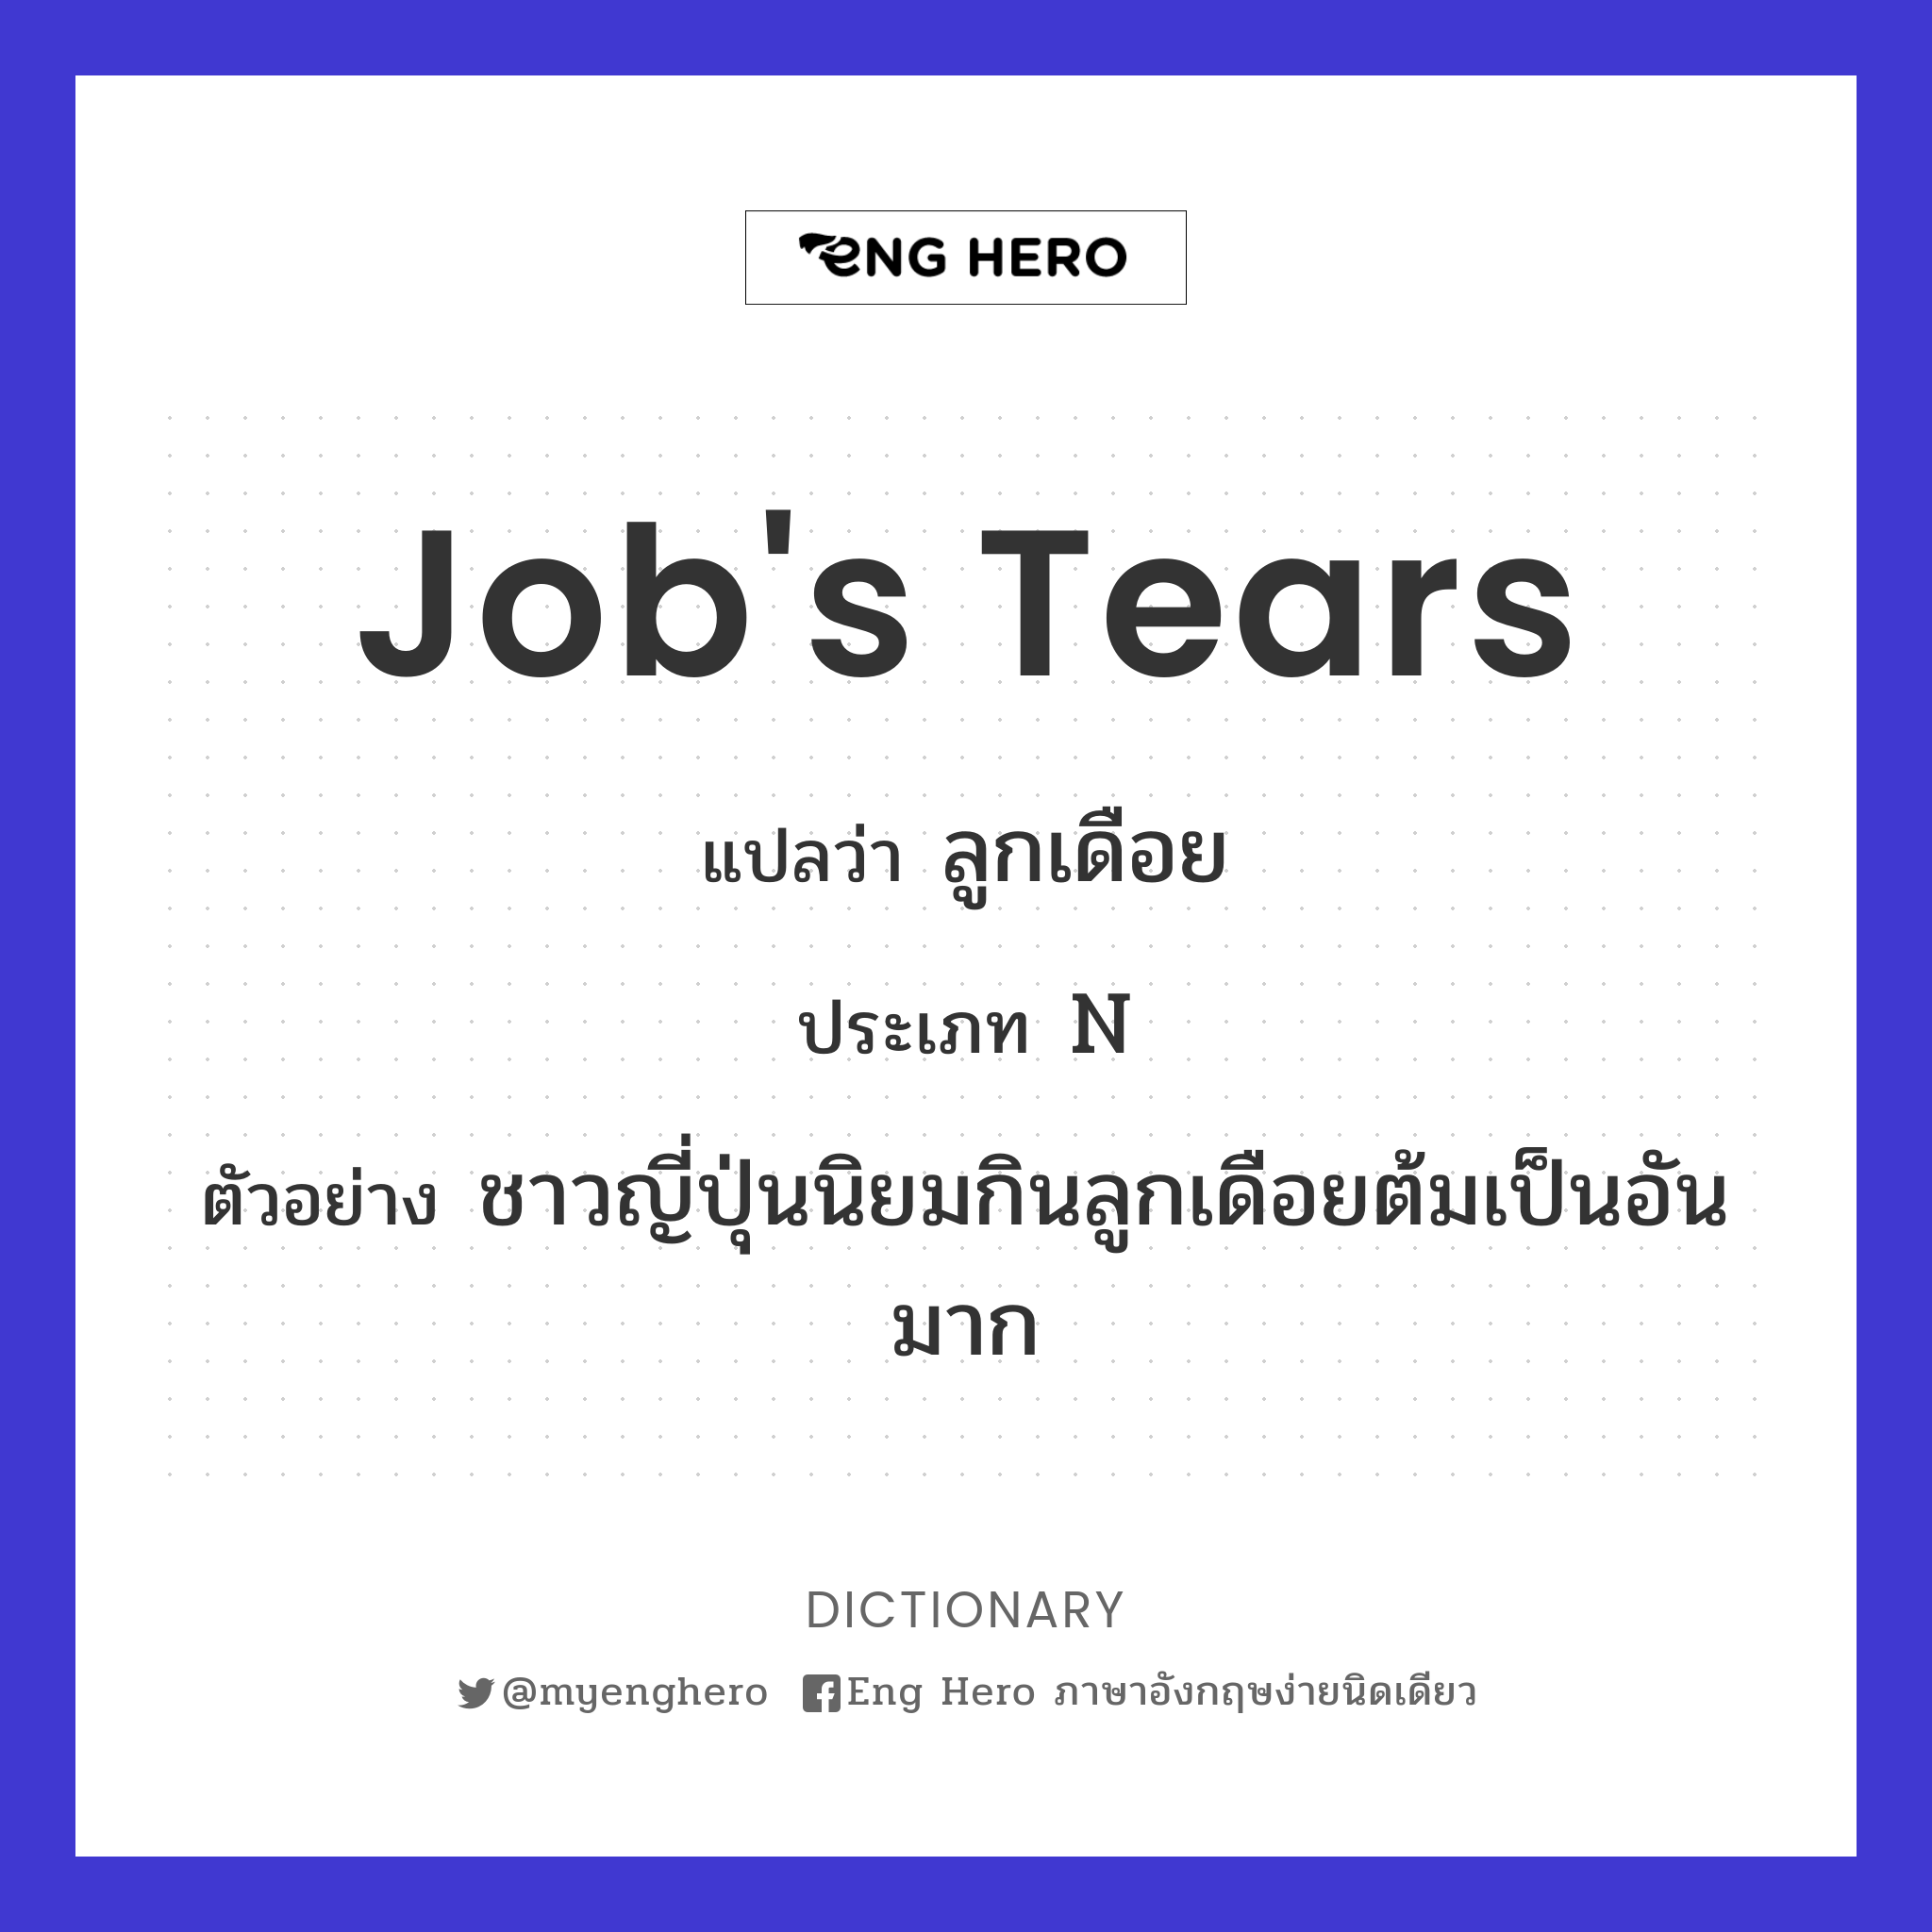 Job's tears